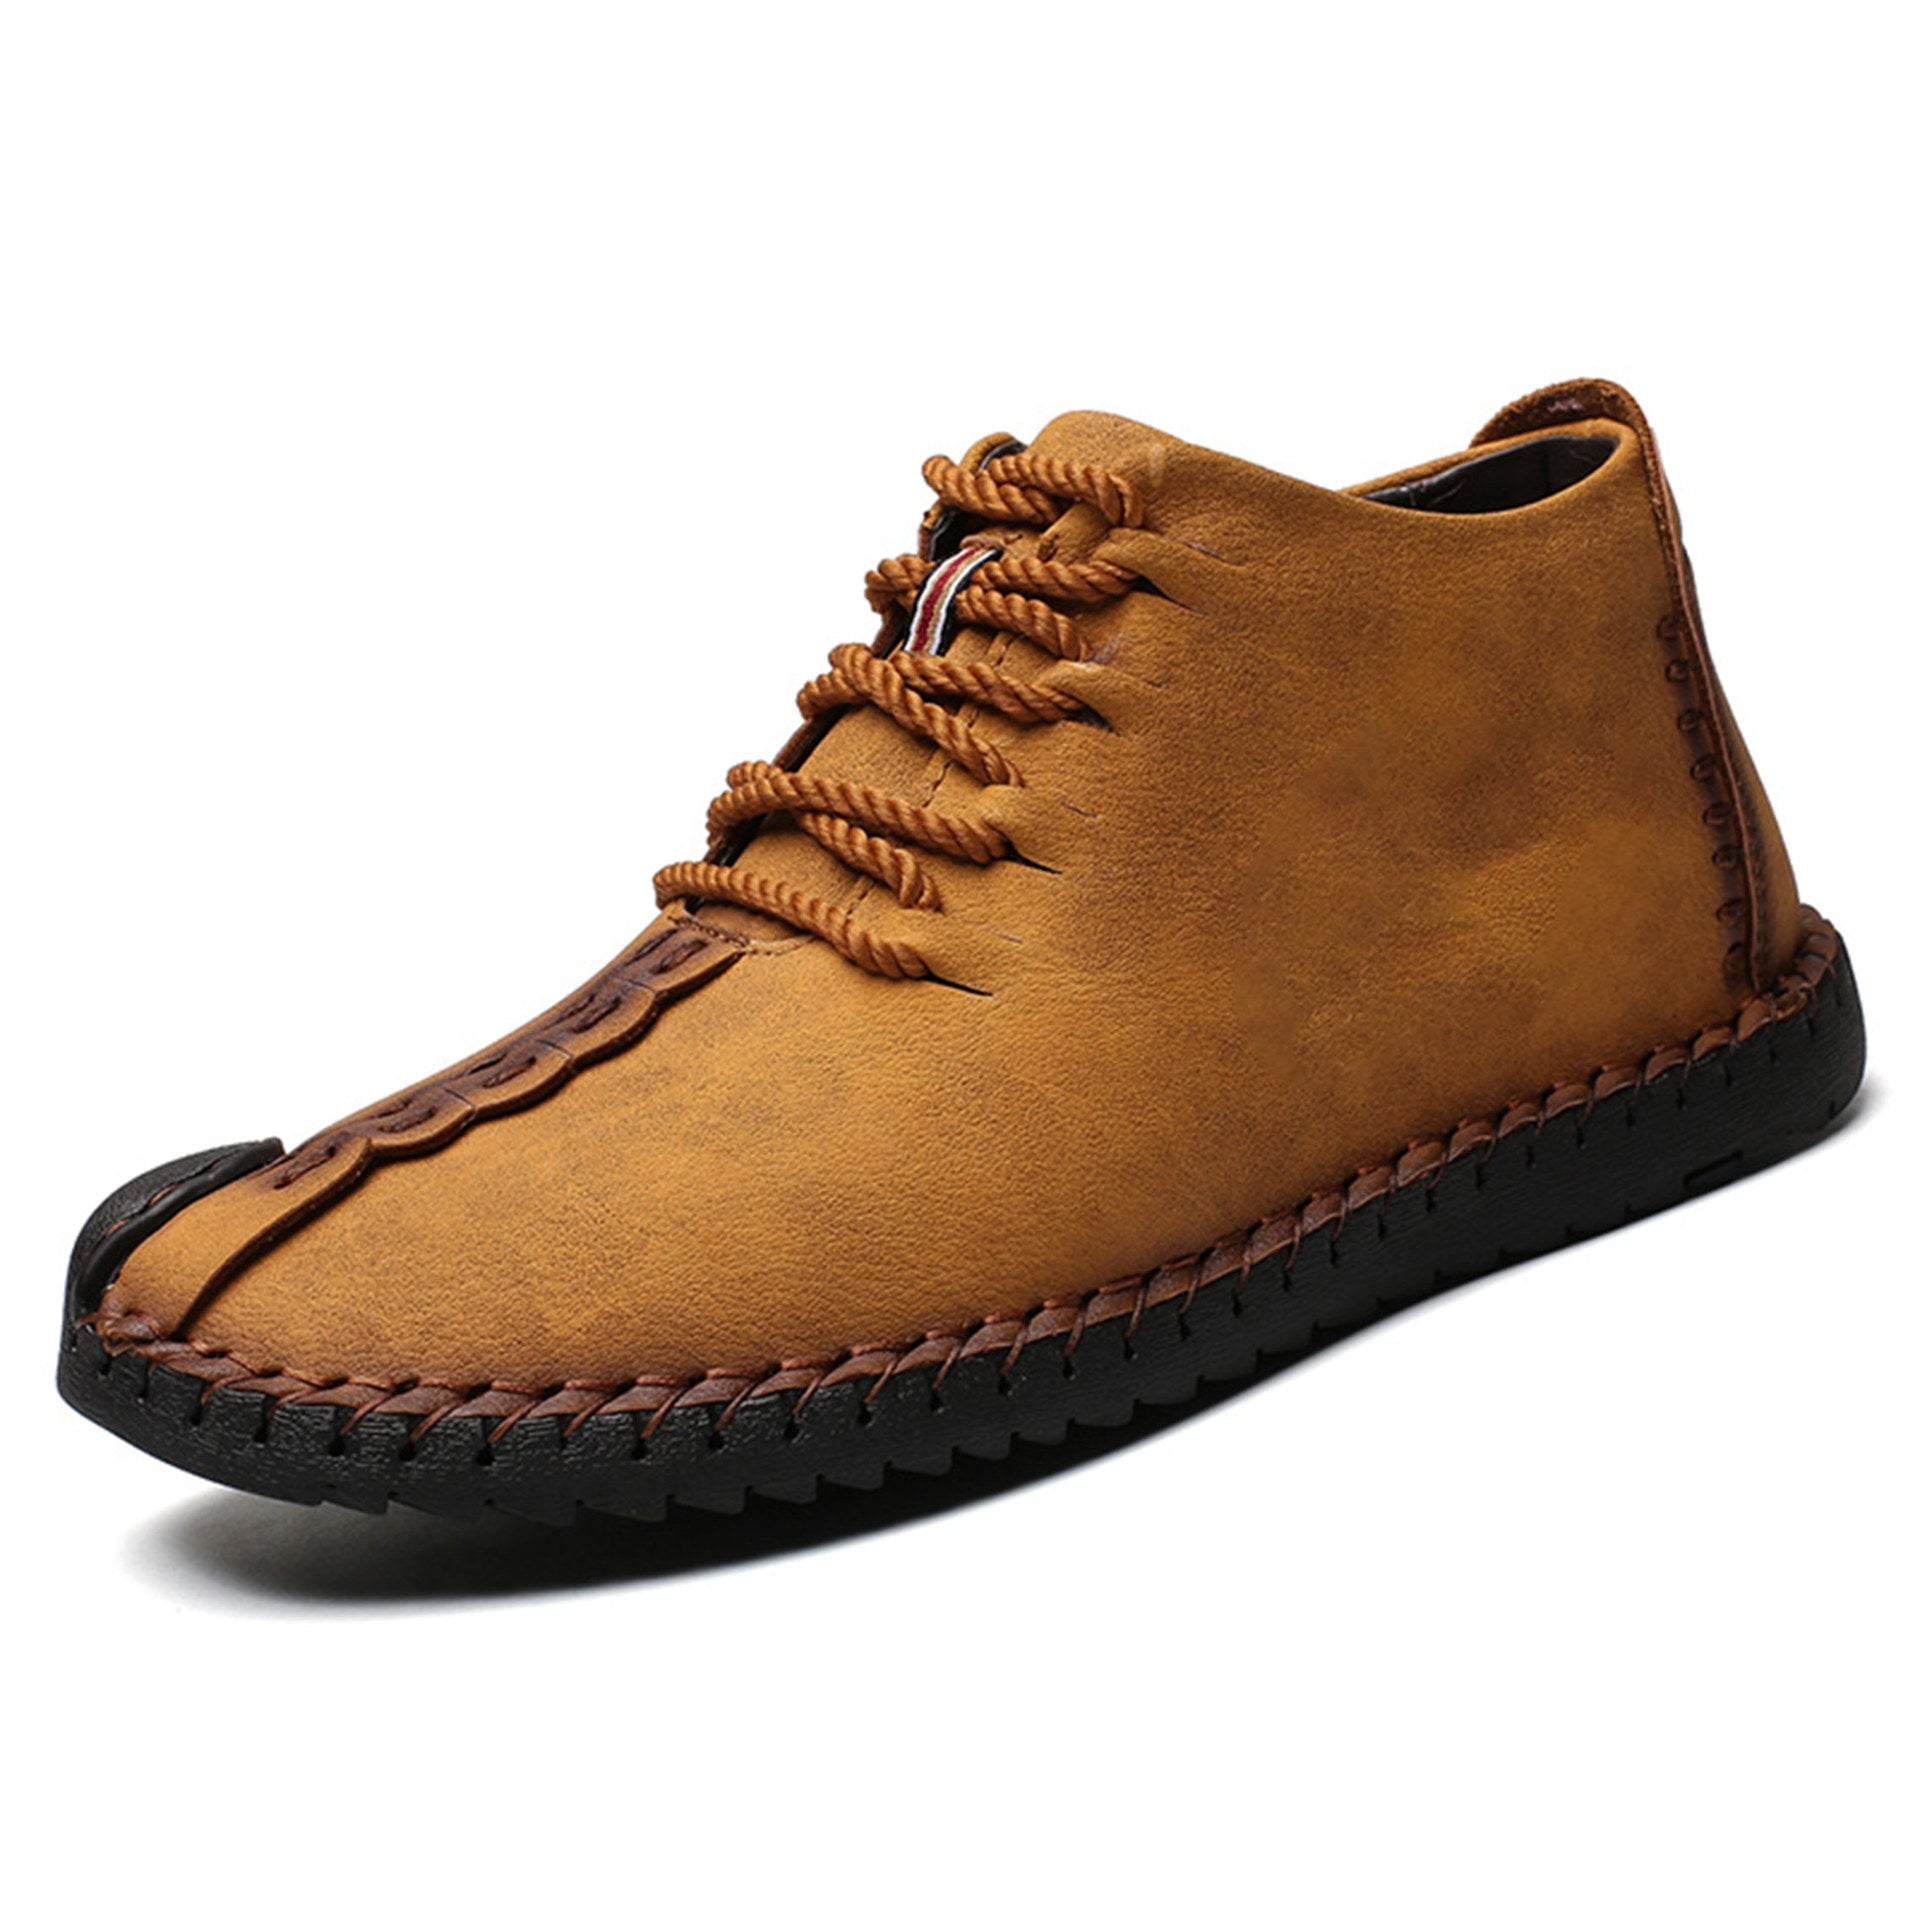 Men's Leather Non-slip Soft Sole Warm Casual Boots